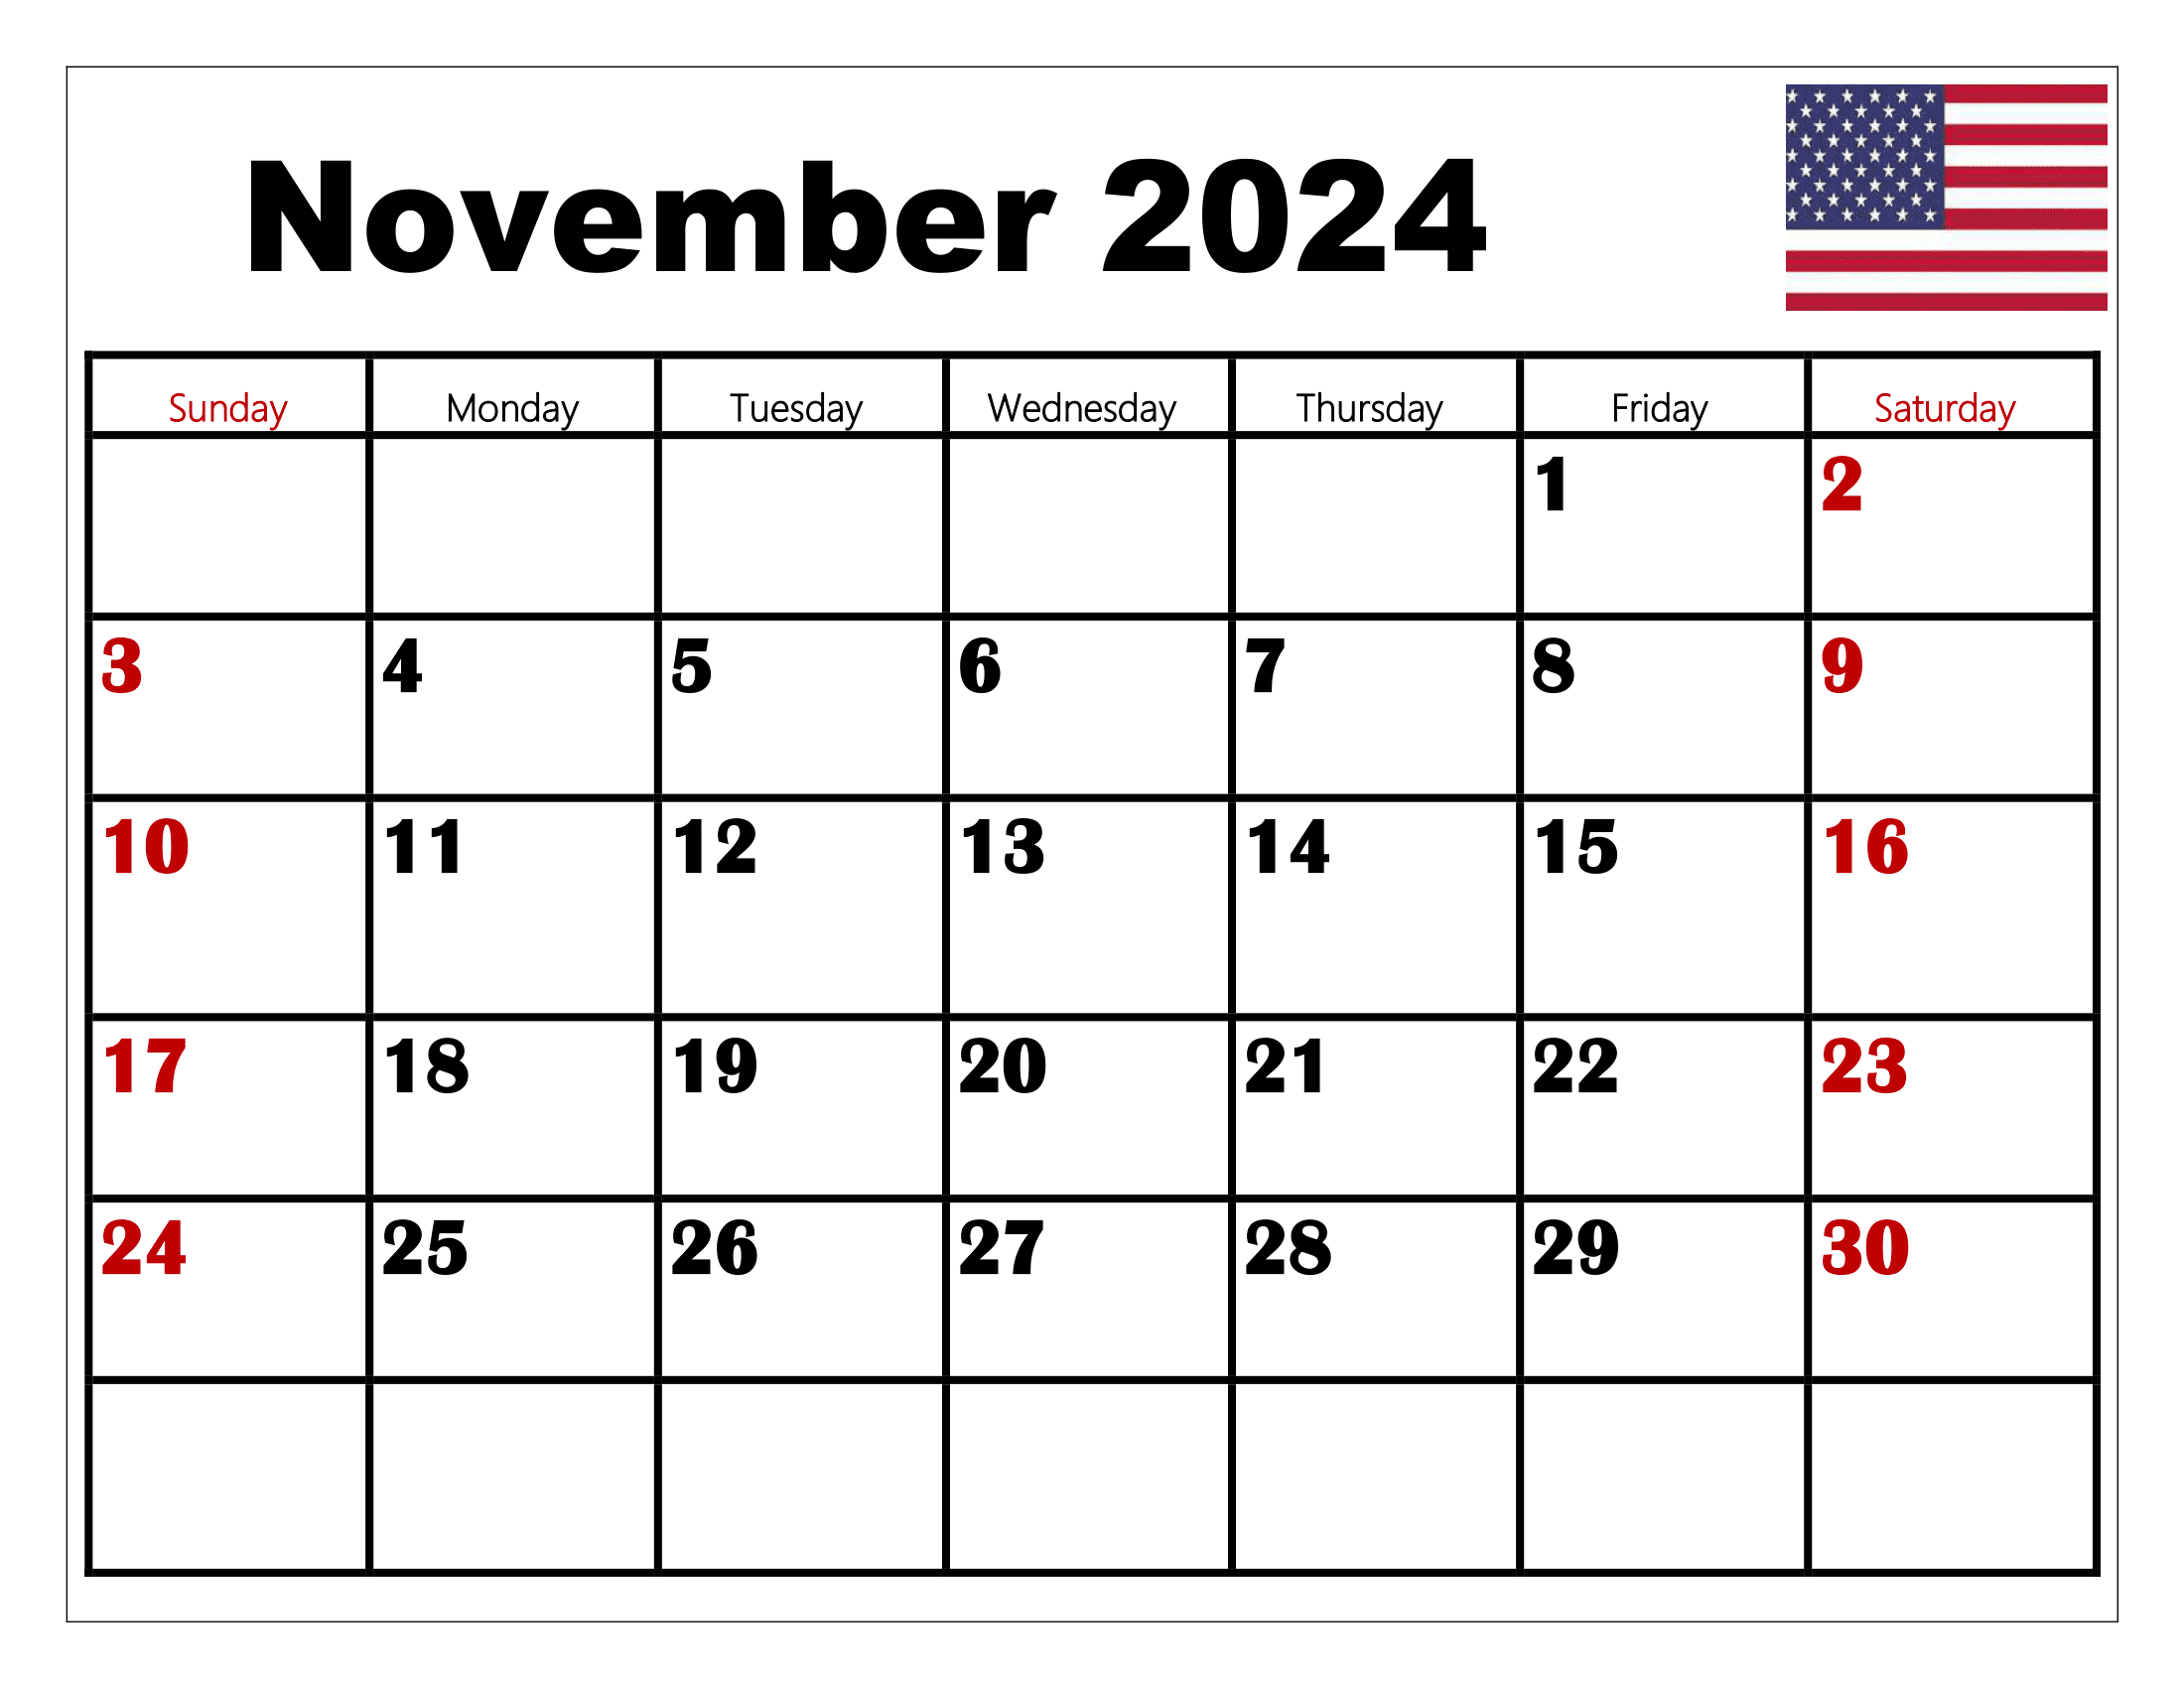 November 2024 Calendar Printable Pdf Template With Holidays for Free Printable November 2024 Calendar With Holidays